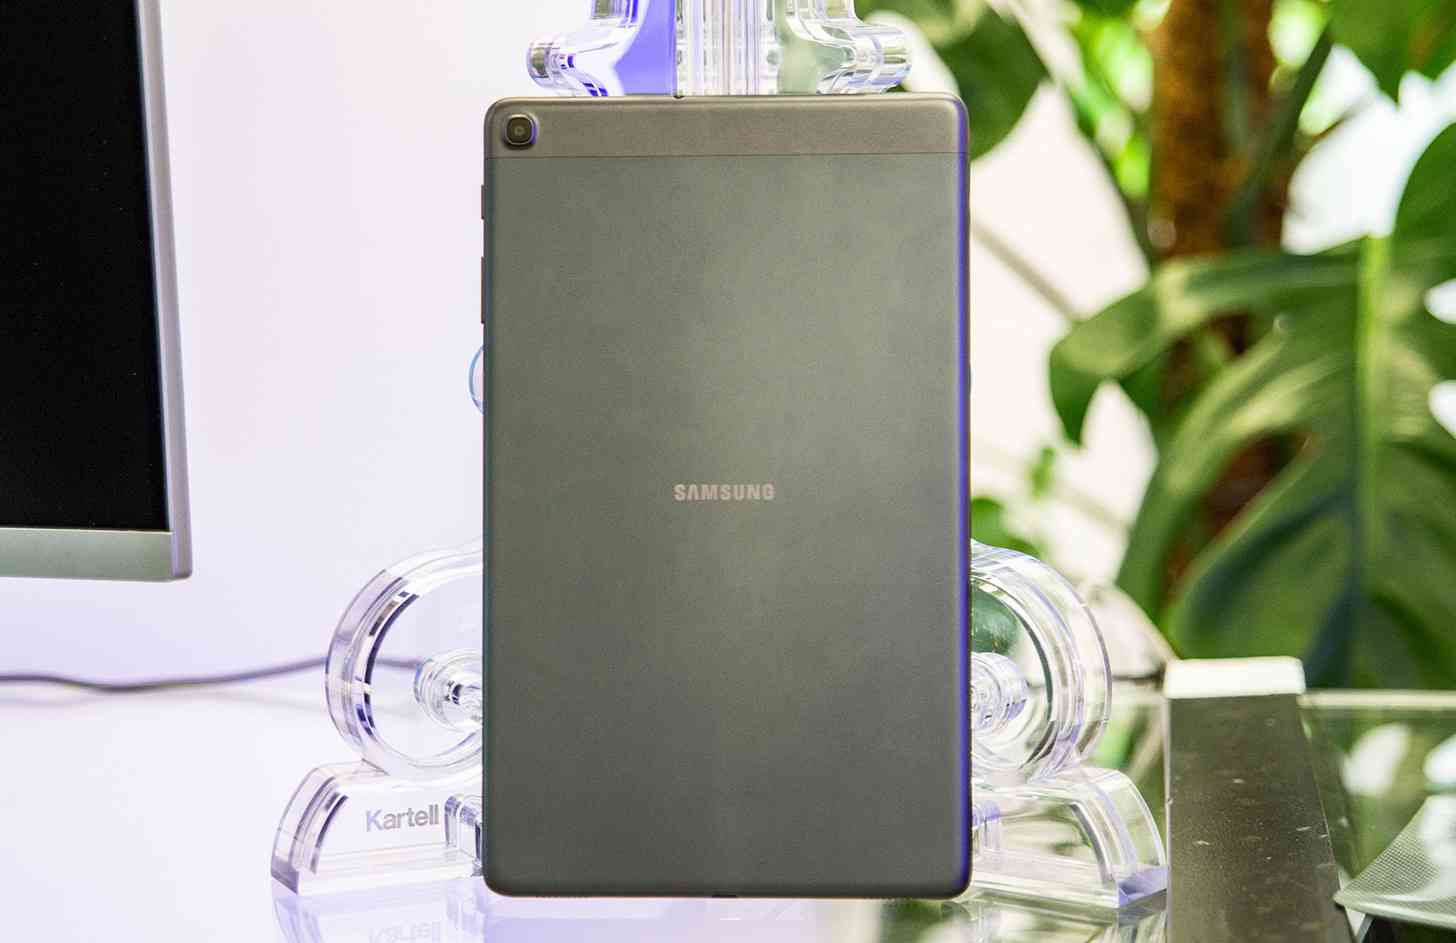 Samsung Galaxy Tab A 10.1 (2019) é anunciado com Android Pie